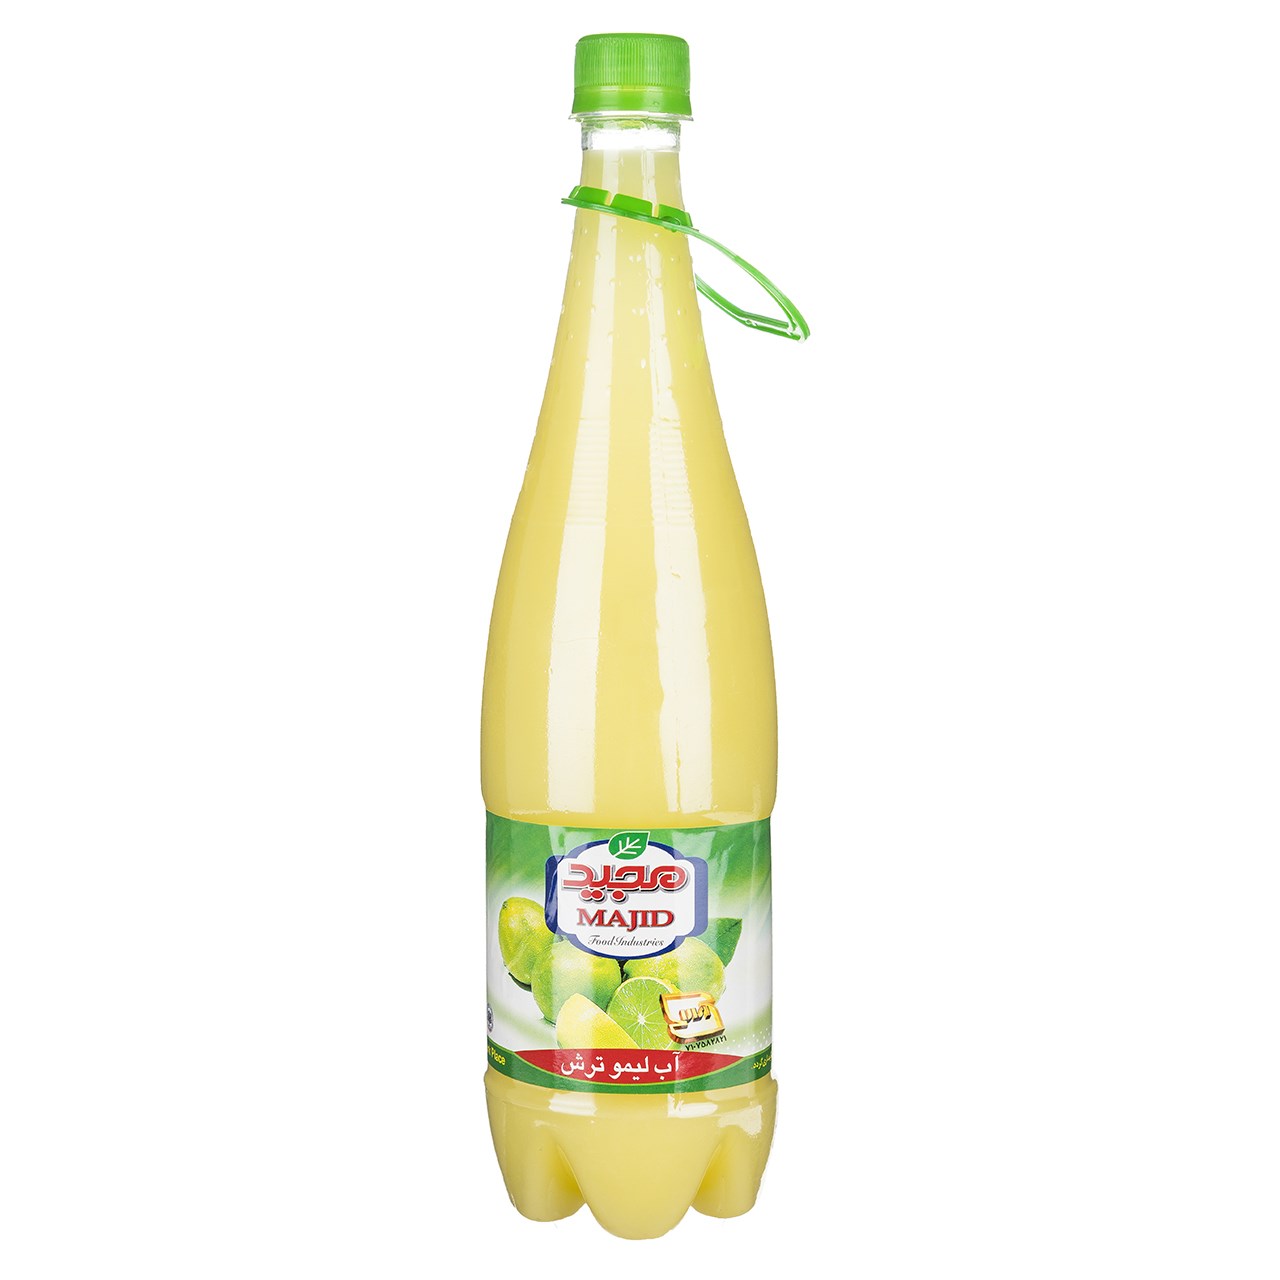 Majid Food Industries Lemon juice 1L